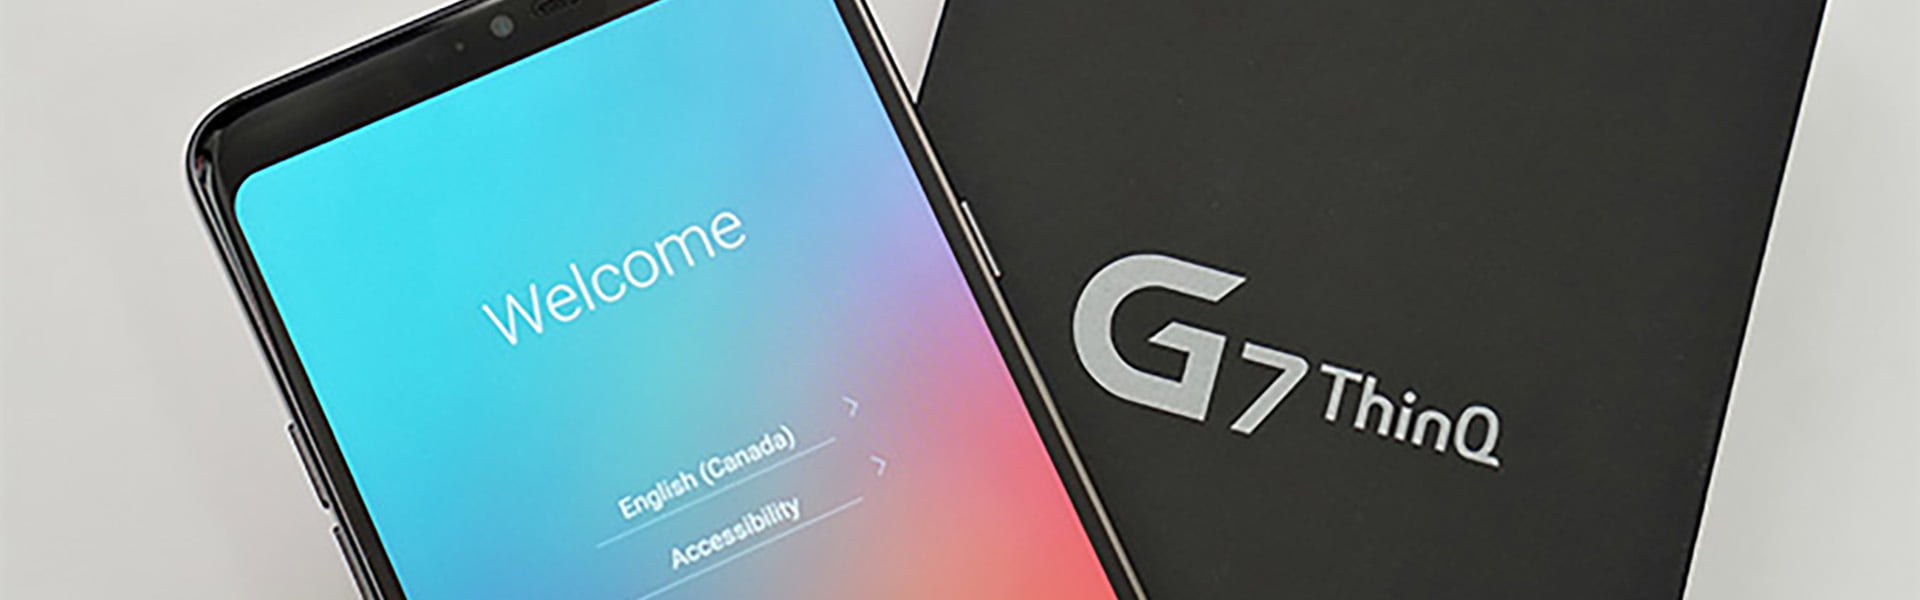 LG G7 ThinQ Review 38